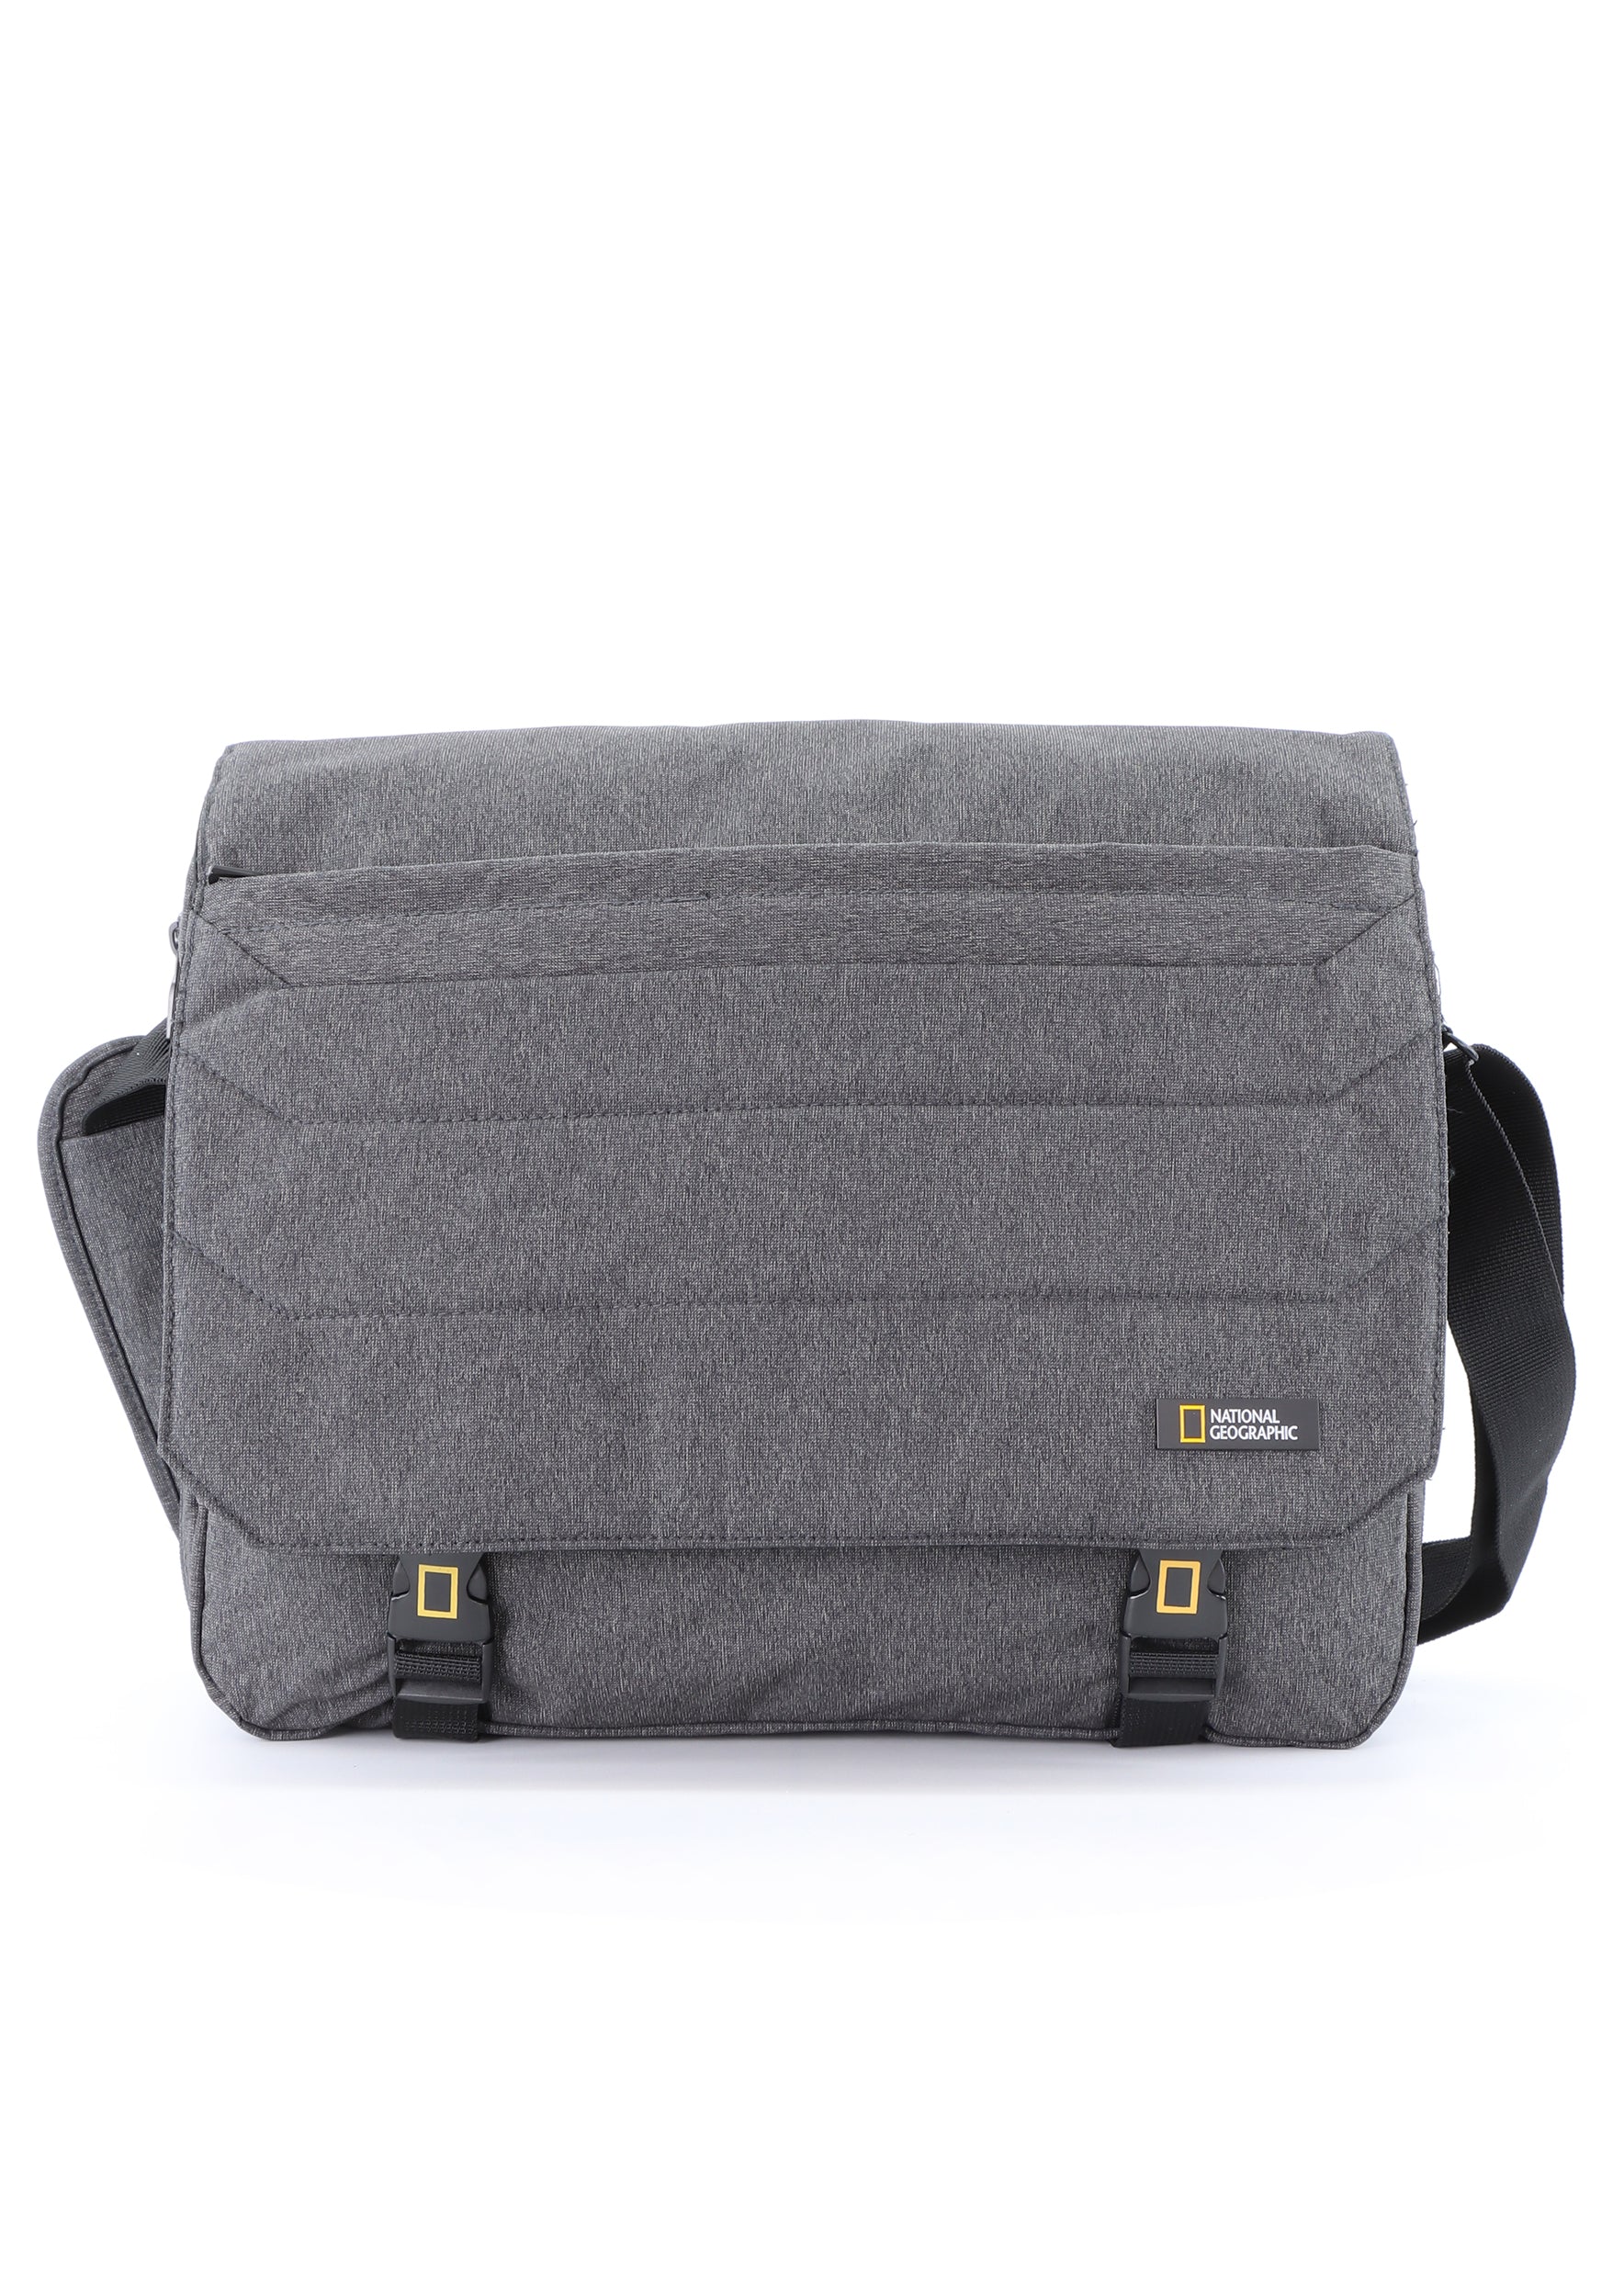 National Geographic Pro - Voorkant 2-Tone Grijs laptop schoudertas | luggage4u.be